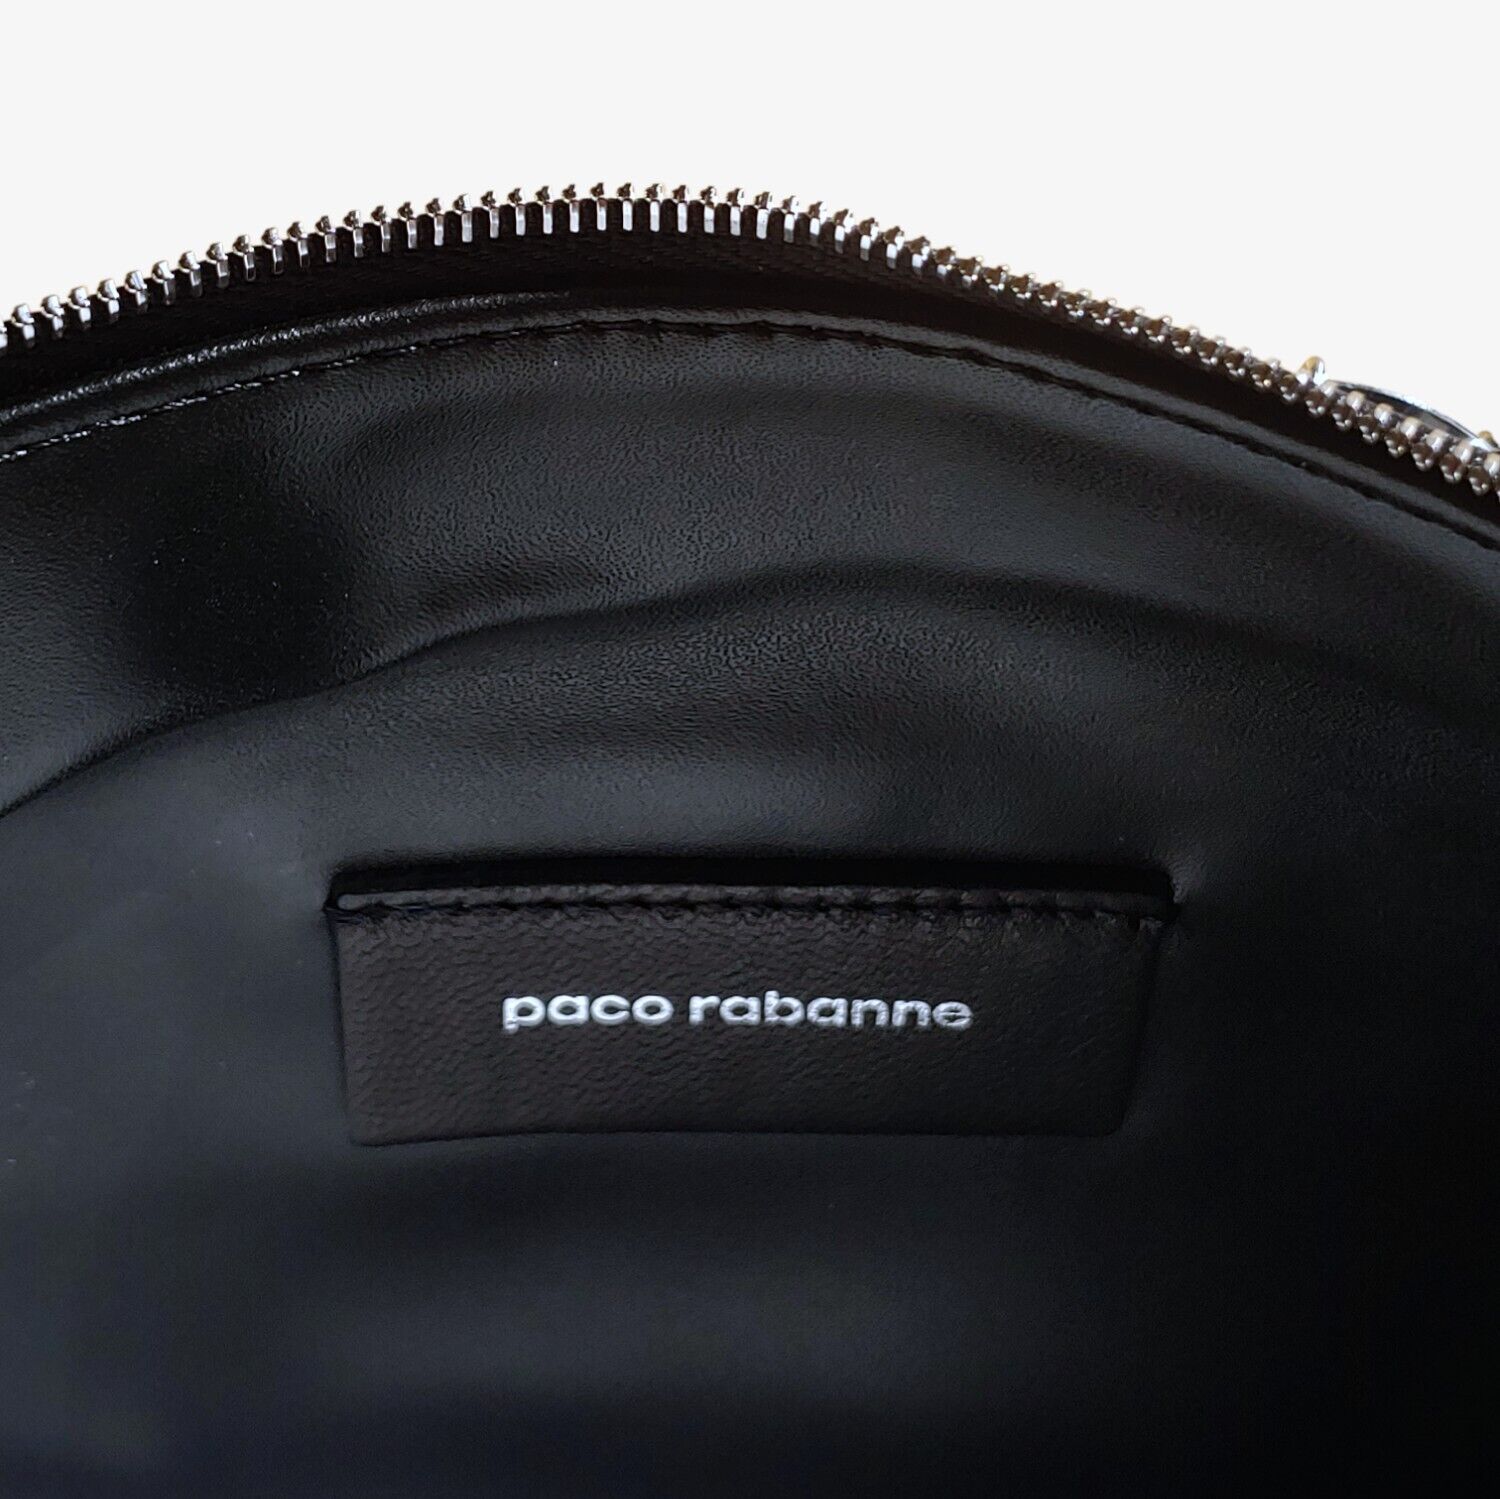 Paco Rabbane 1969 Silver Sequin Mini Crossbody Handbag Brand New With Tags Inside Label - Casspio's Dream